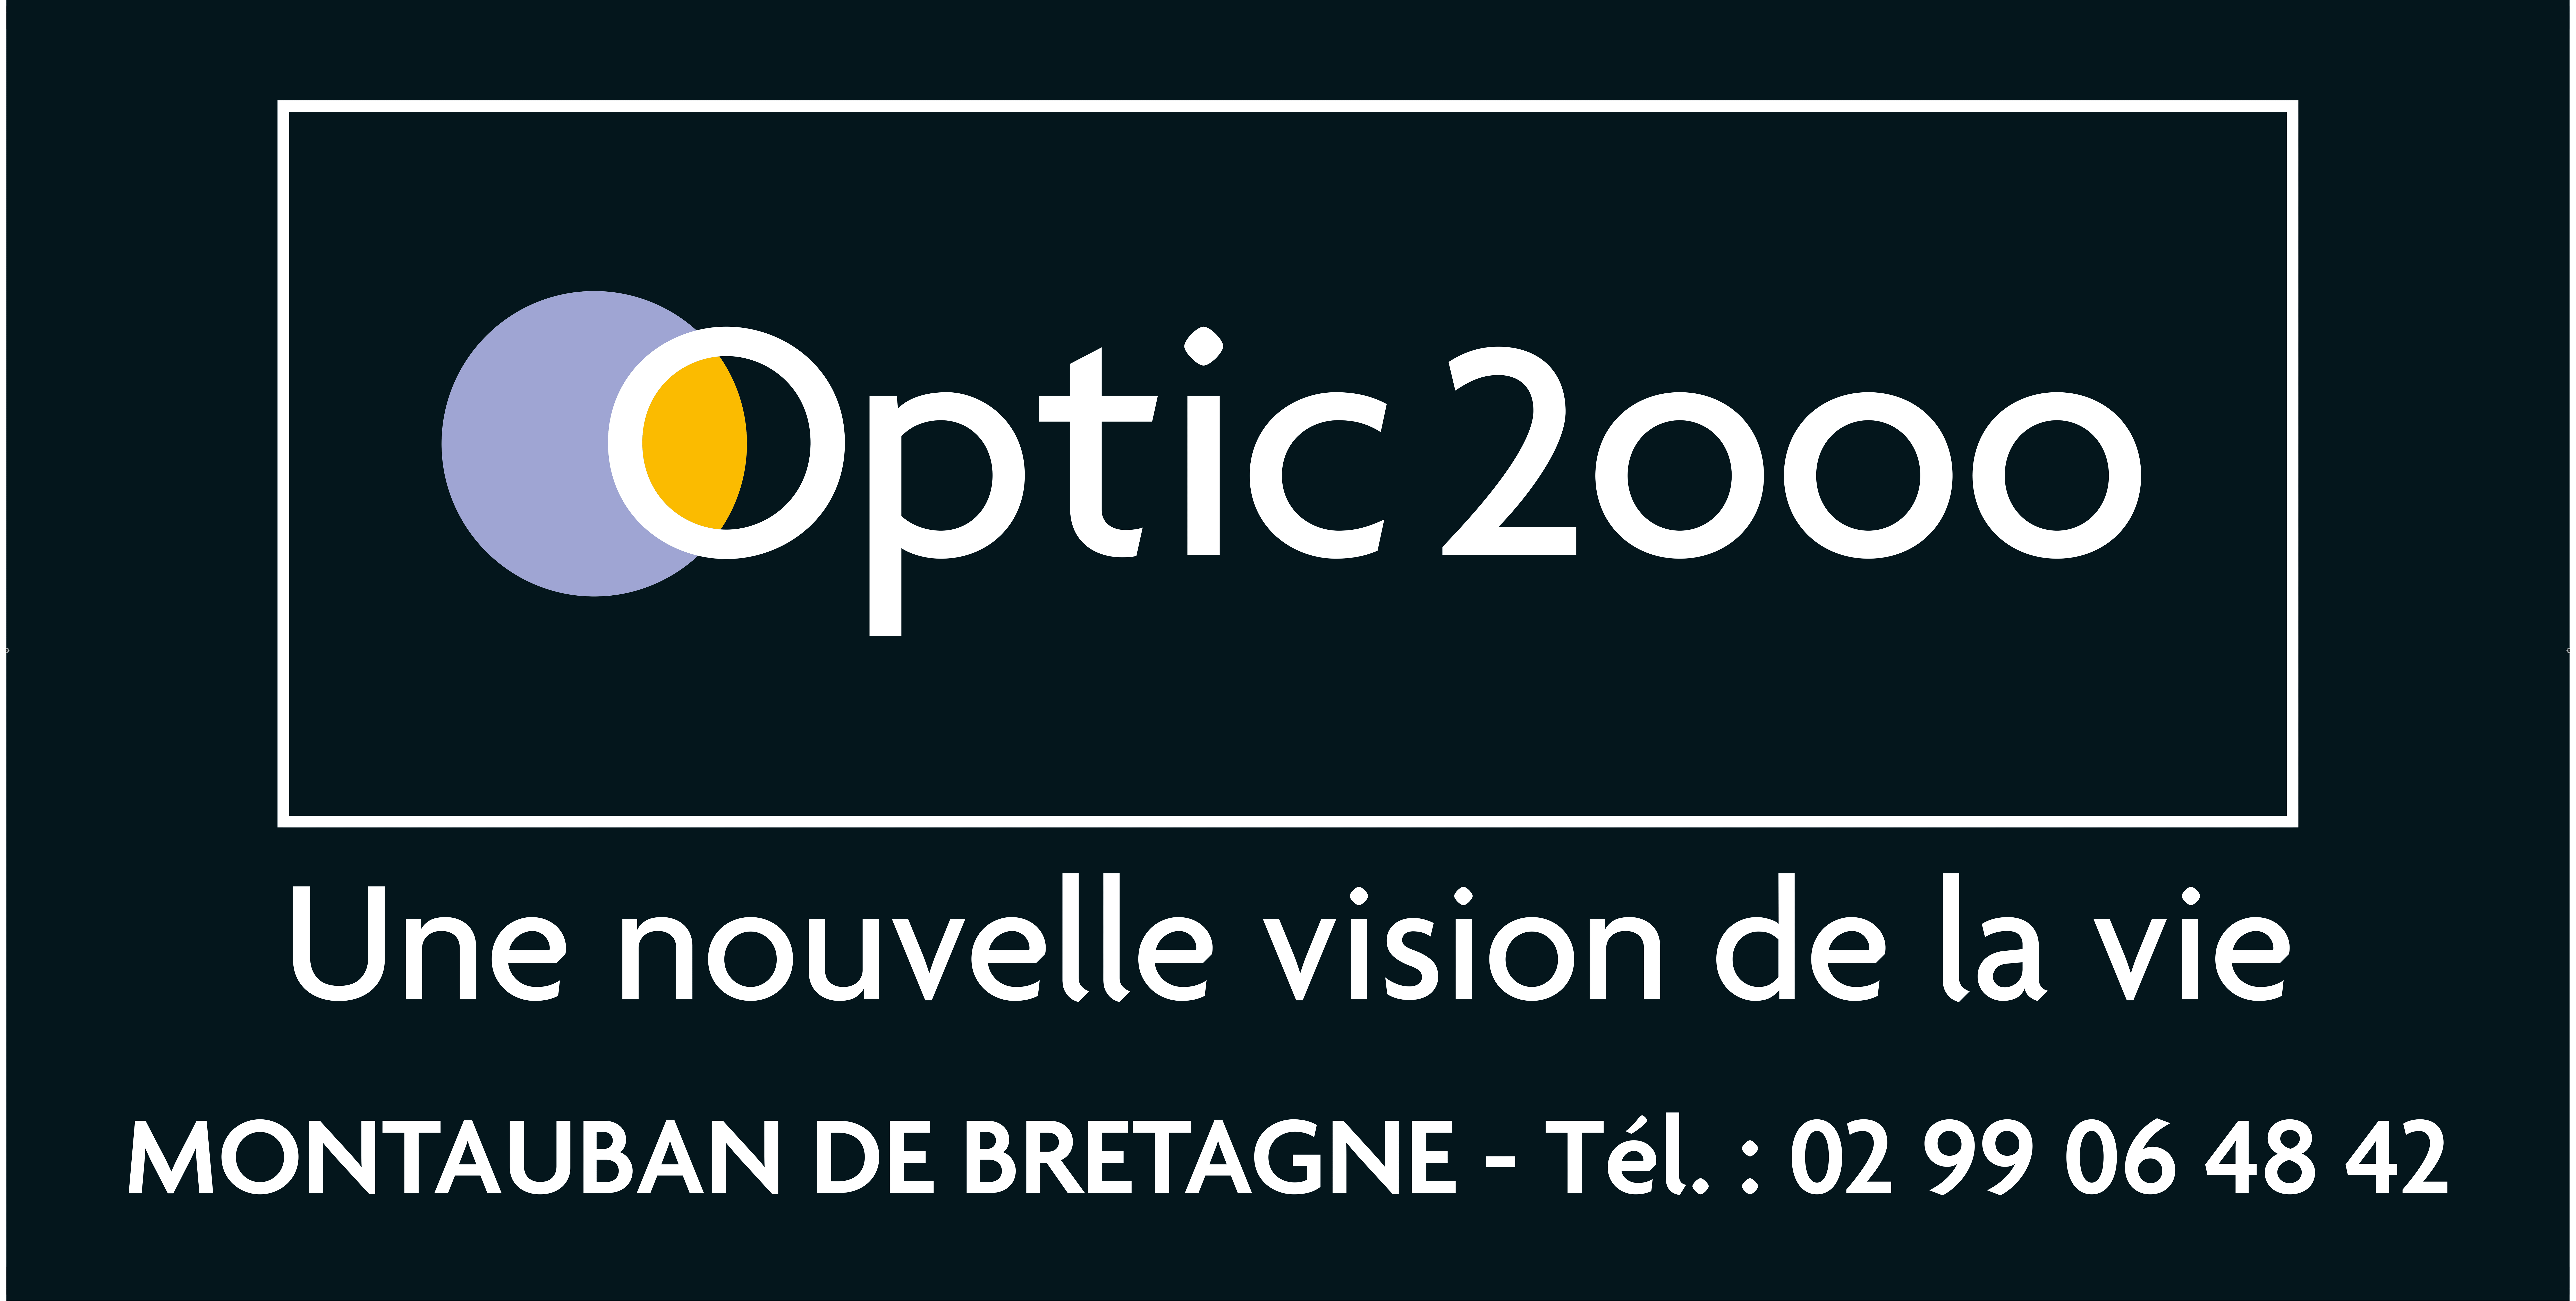 OPTIC-2000-1